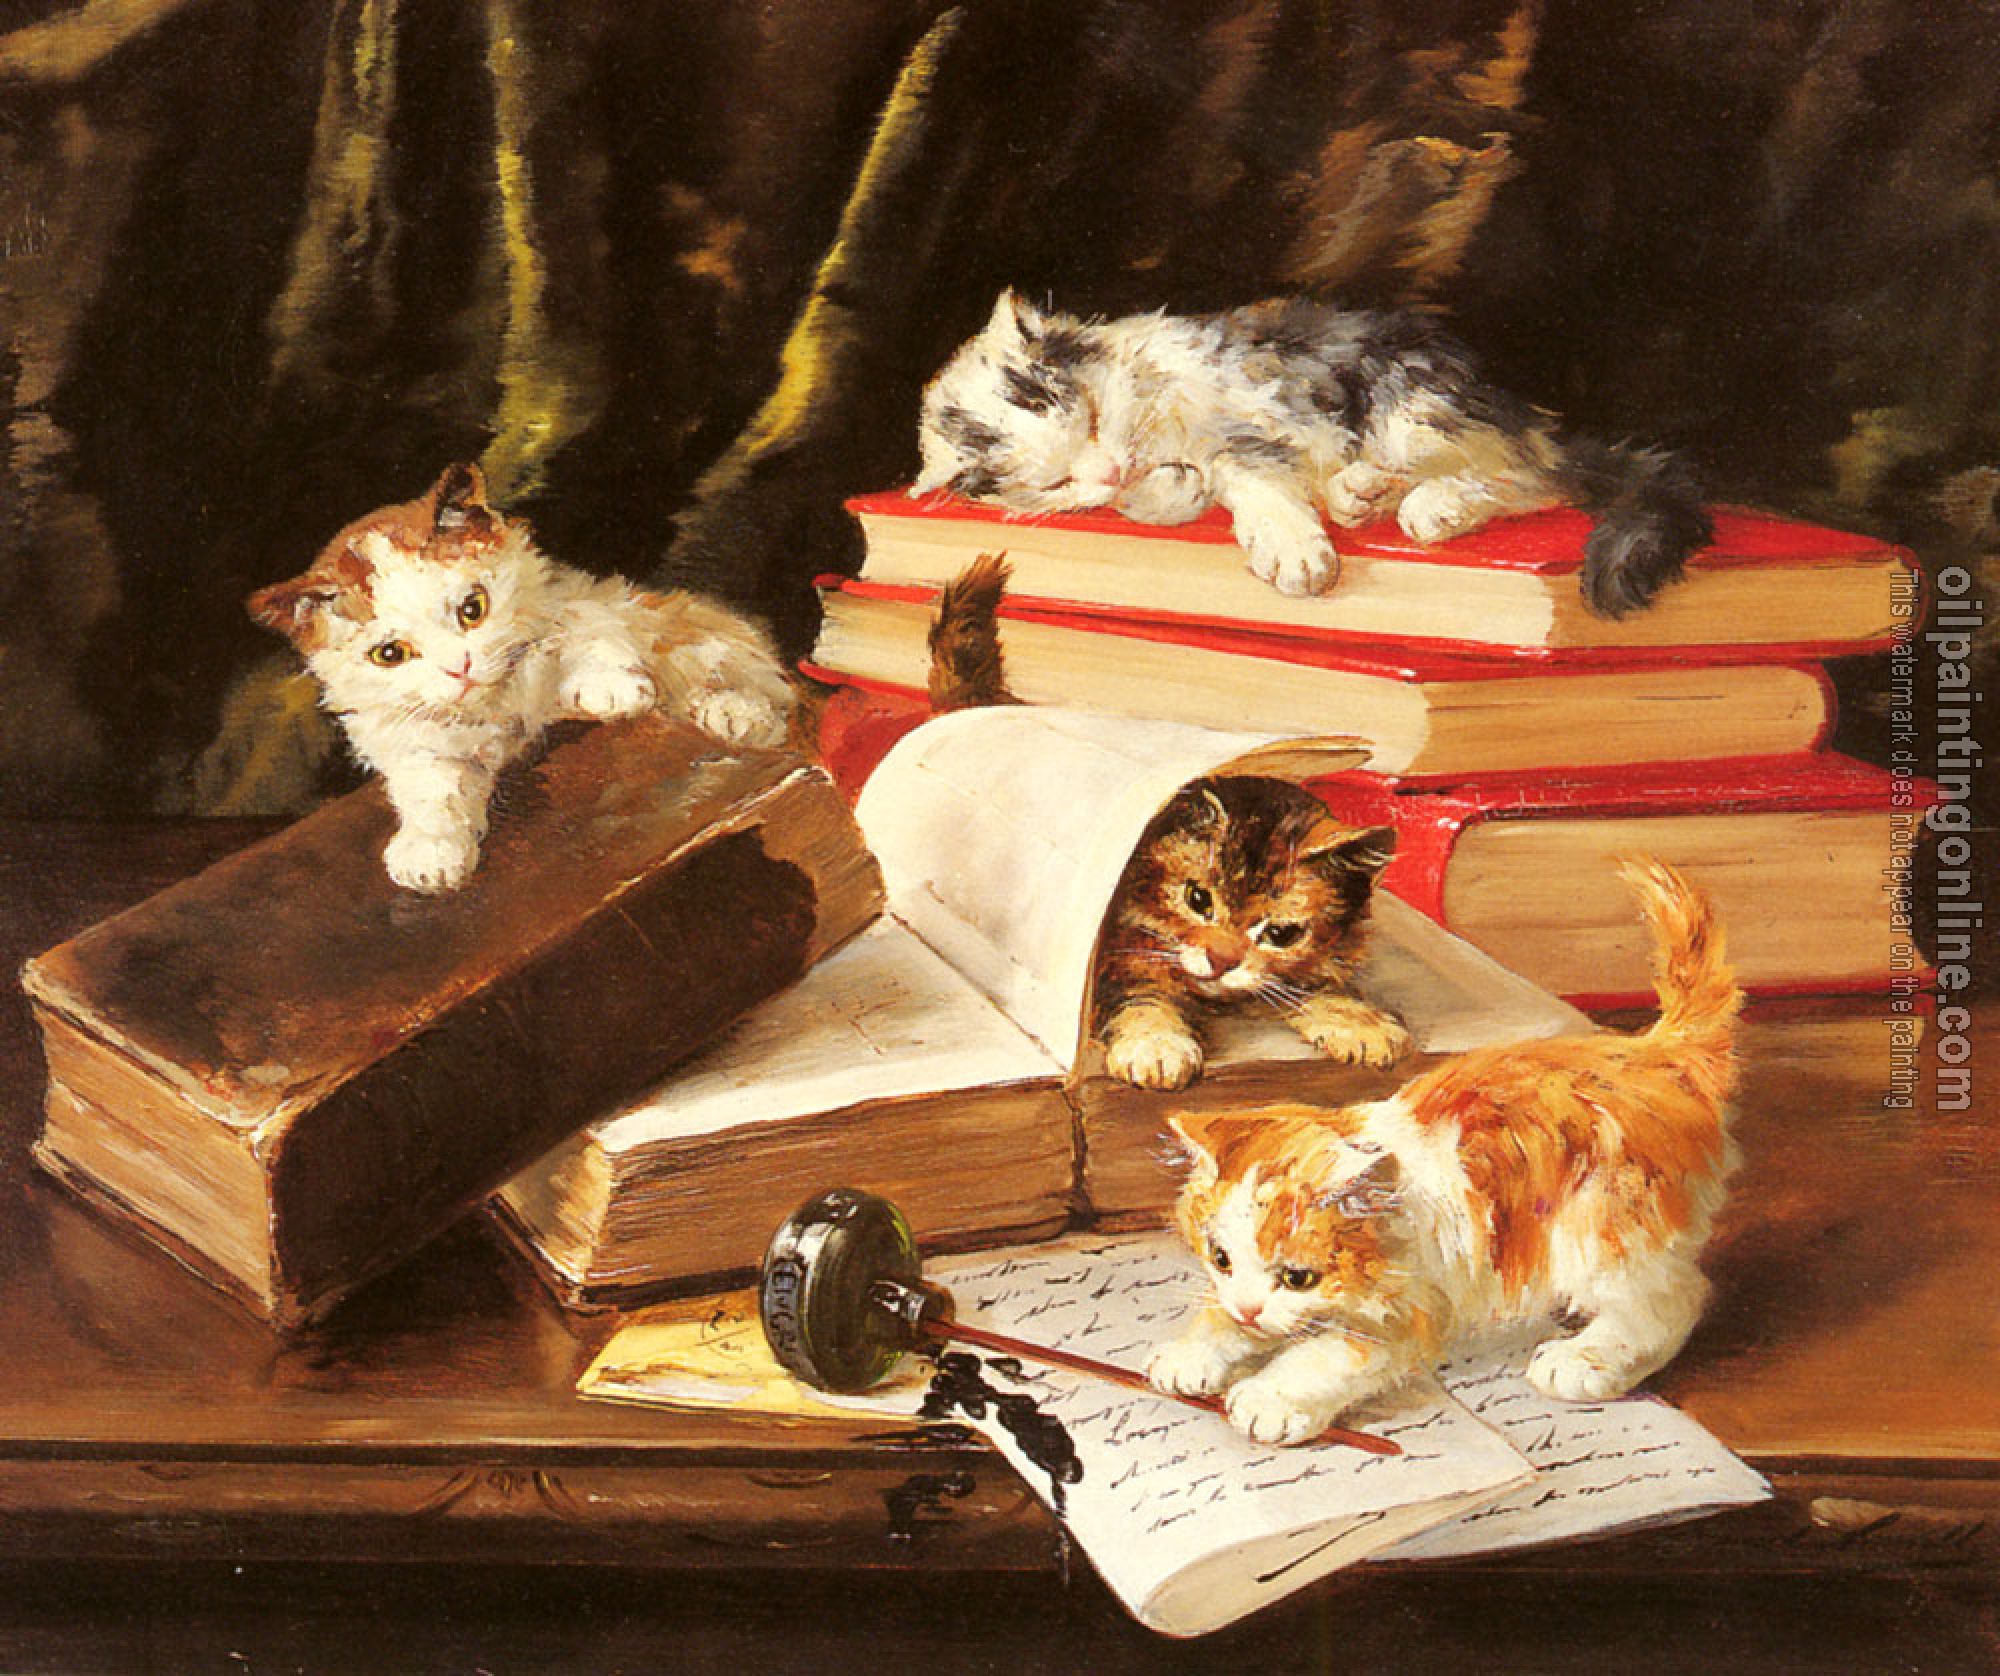 Neuville, Alfred Arthur Brunel de - Kittens Playing on a Desk